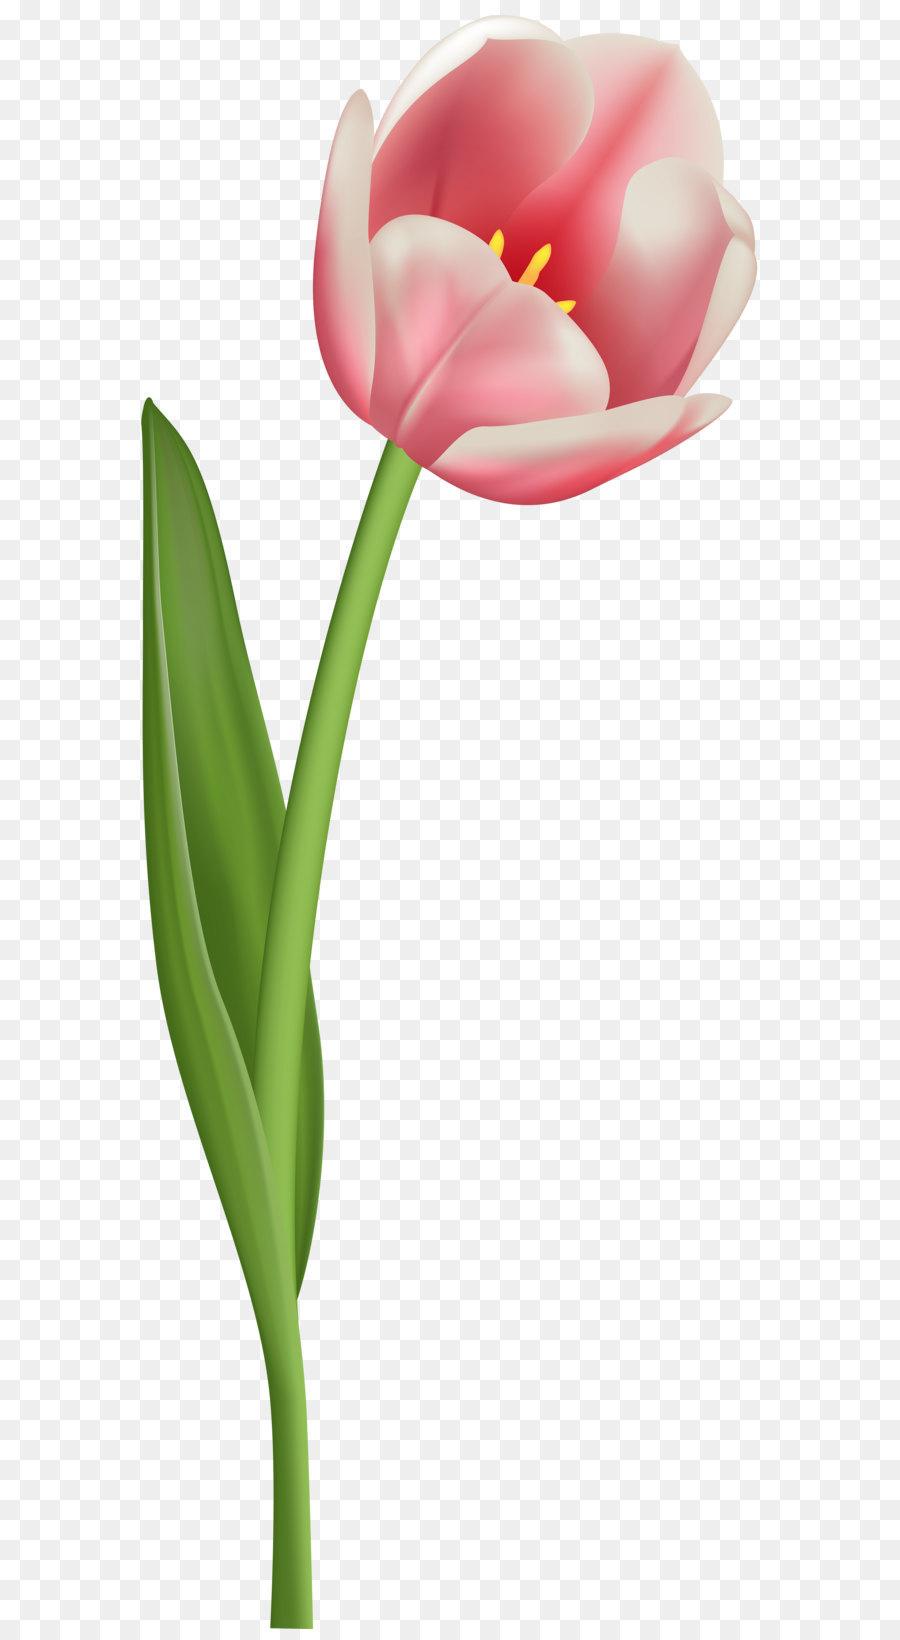 Tulip mania iPhone 8 - Open Tulip Transparent PNG Clip Art Image png download - 3193*8000 - Free Transparent Tulip Mania png Download.